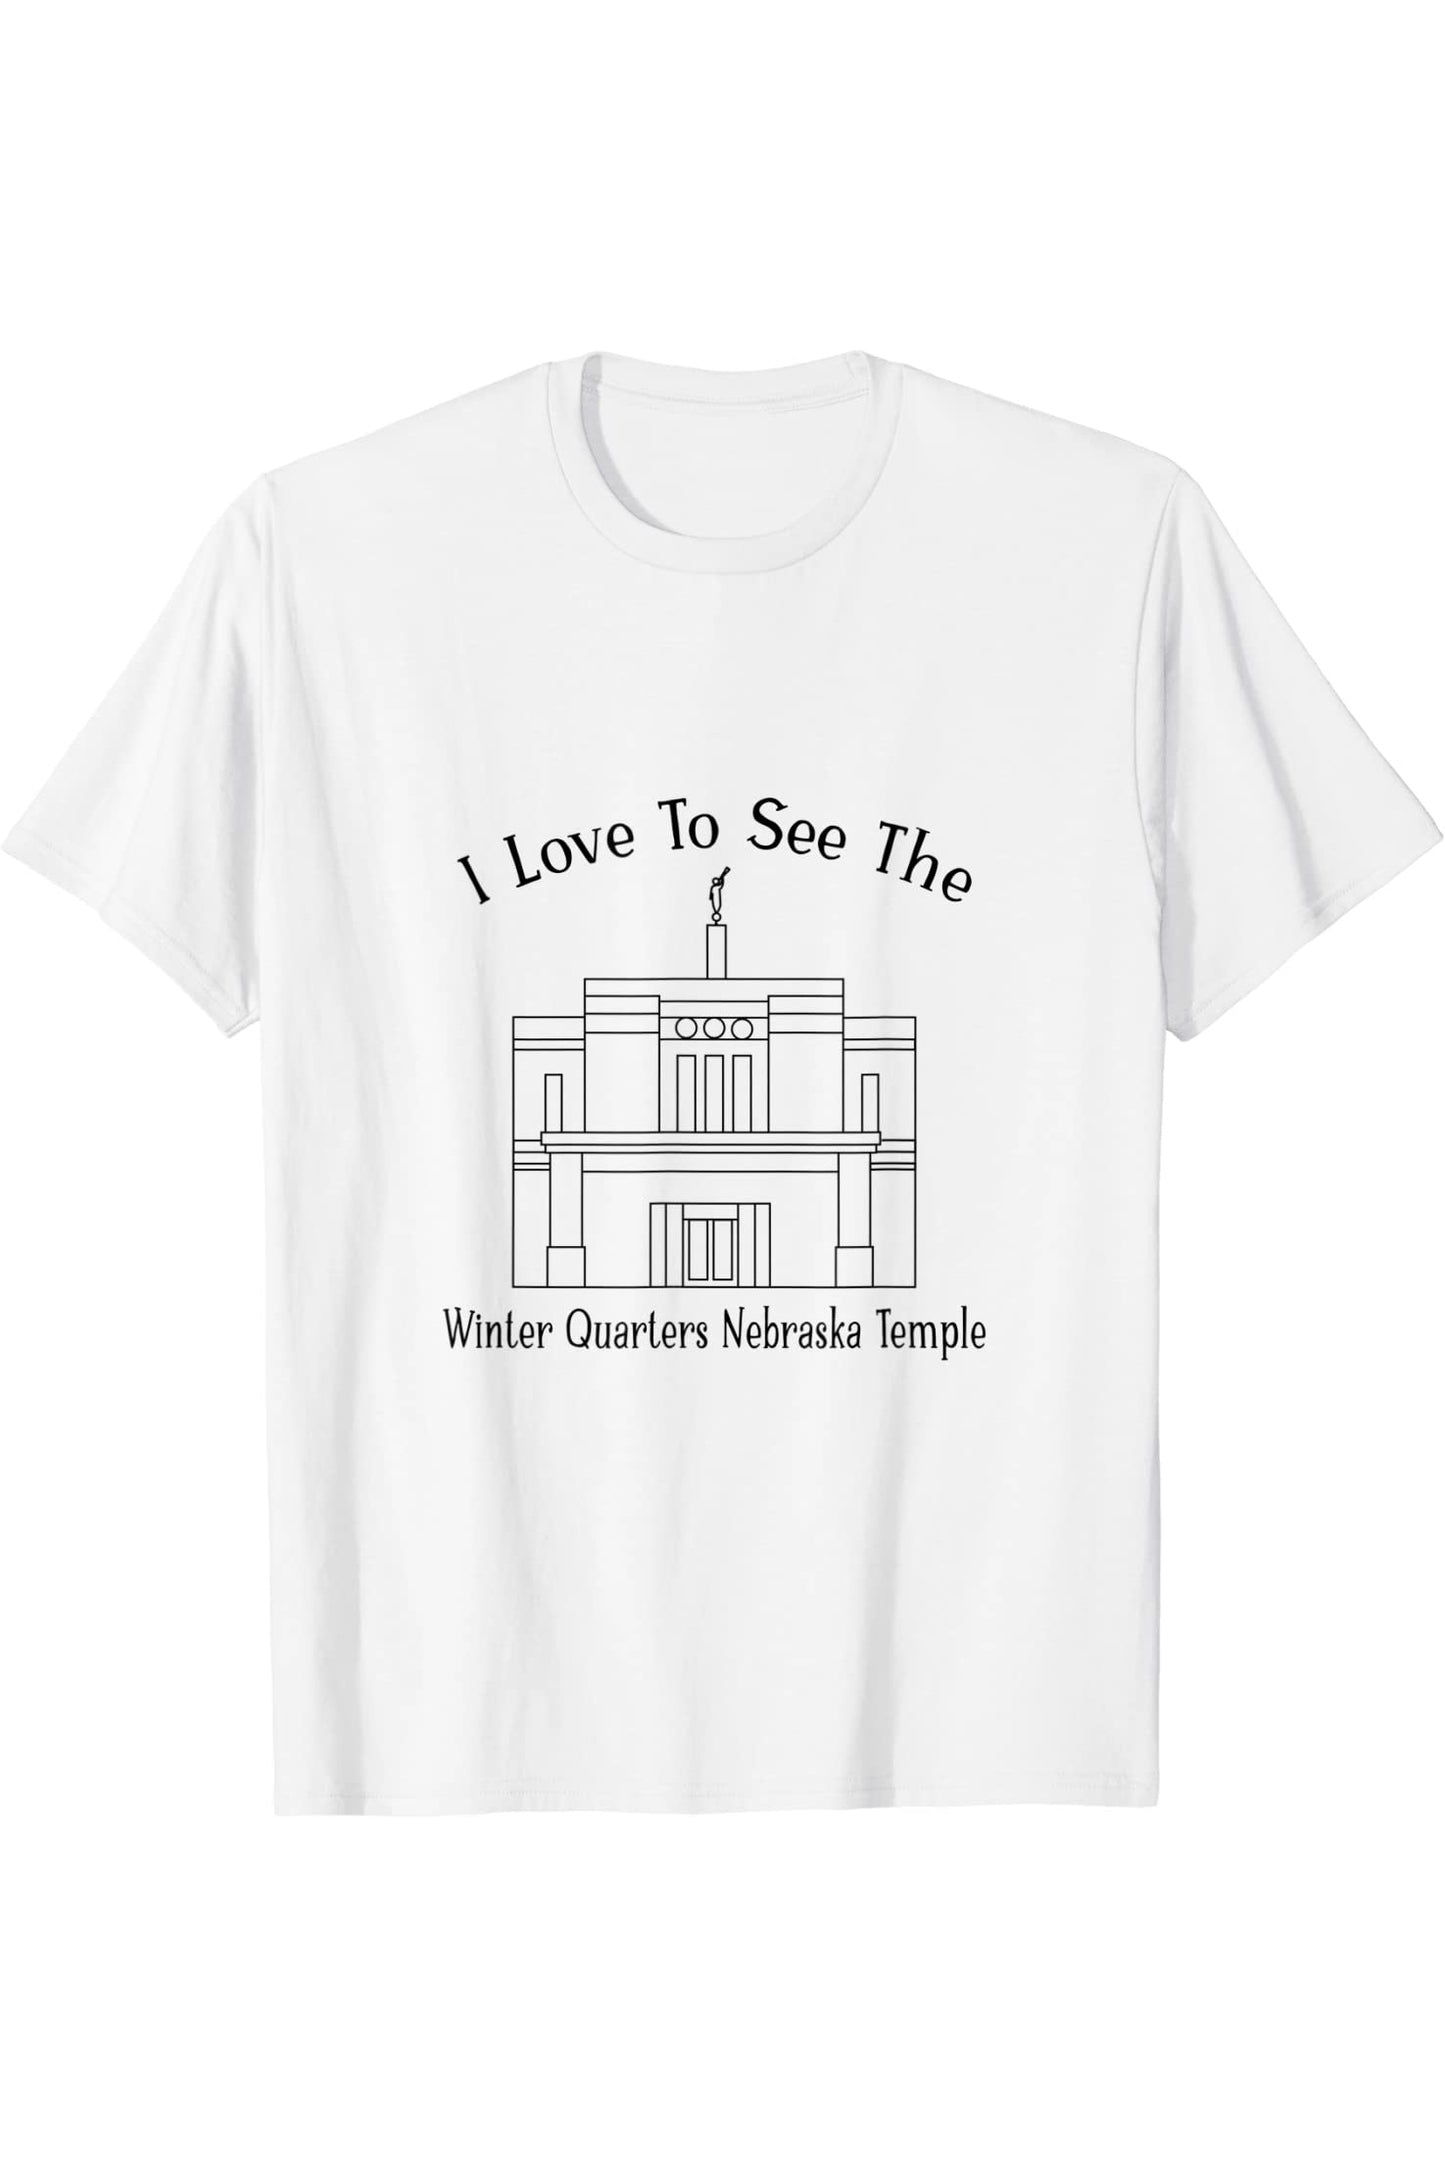 Winter Quarters Nebraska Temple T-Shirt - Happy Style (English) US